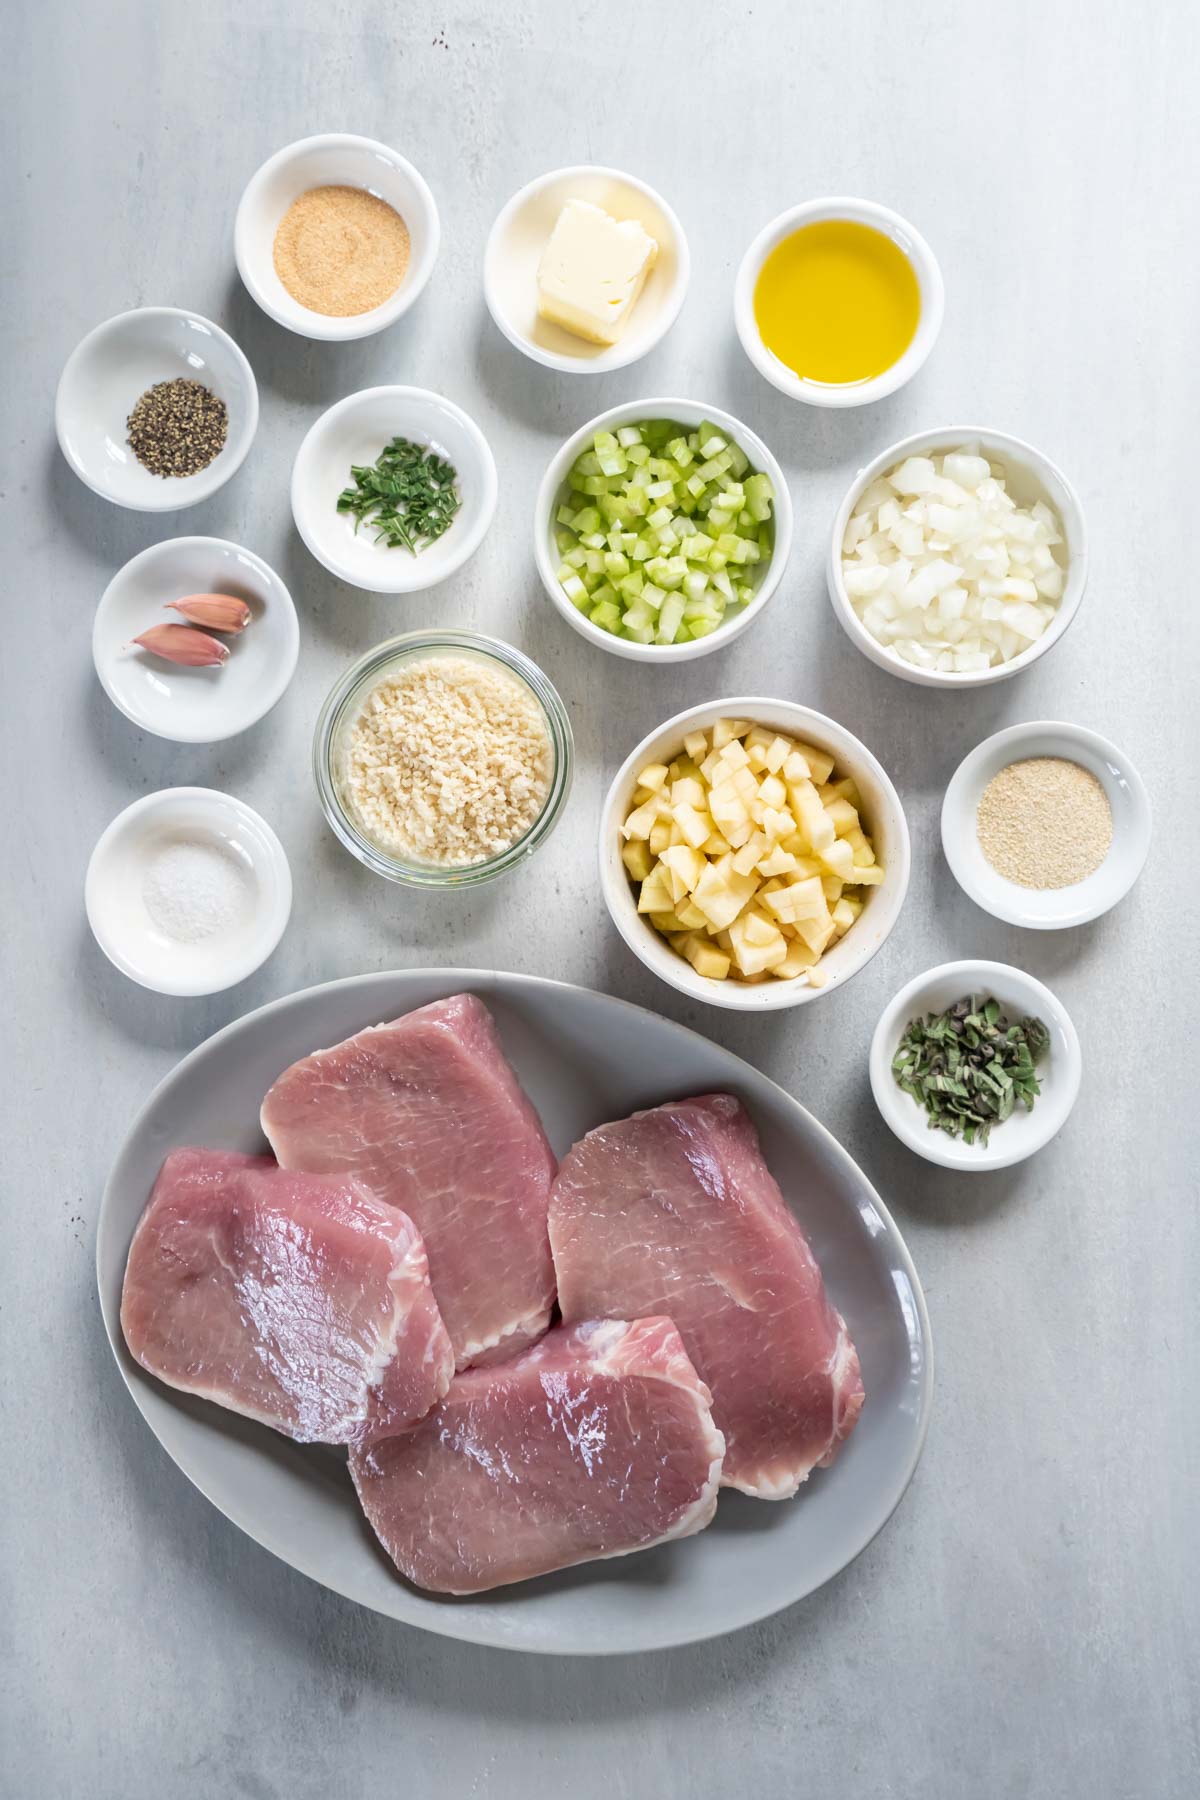 Ingredients for stuffed pork chops recipe.